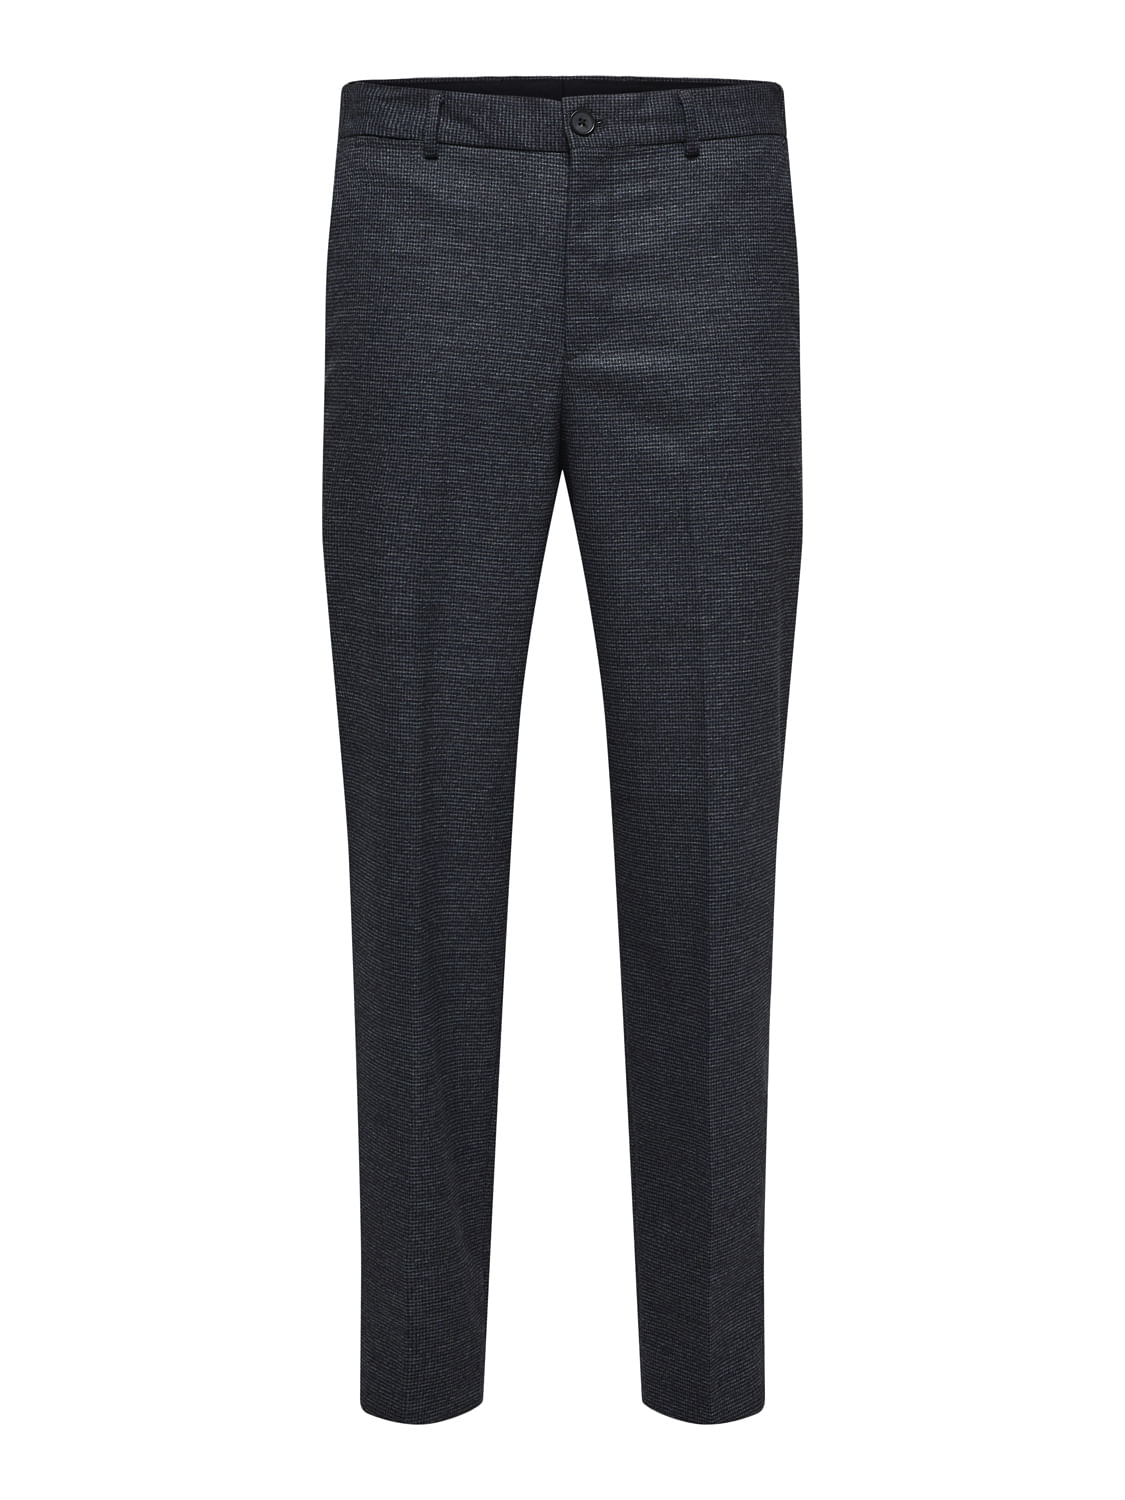 Guvpev Men's Casual Loose Pants Loose Fit Linen Comfortable Breathable Pants  - Dark Gray XXXL - Walmart.com